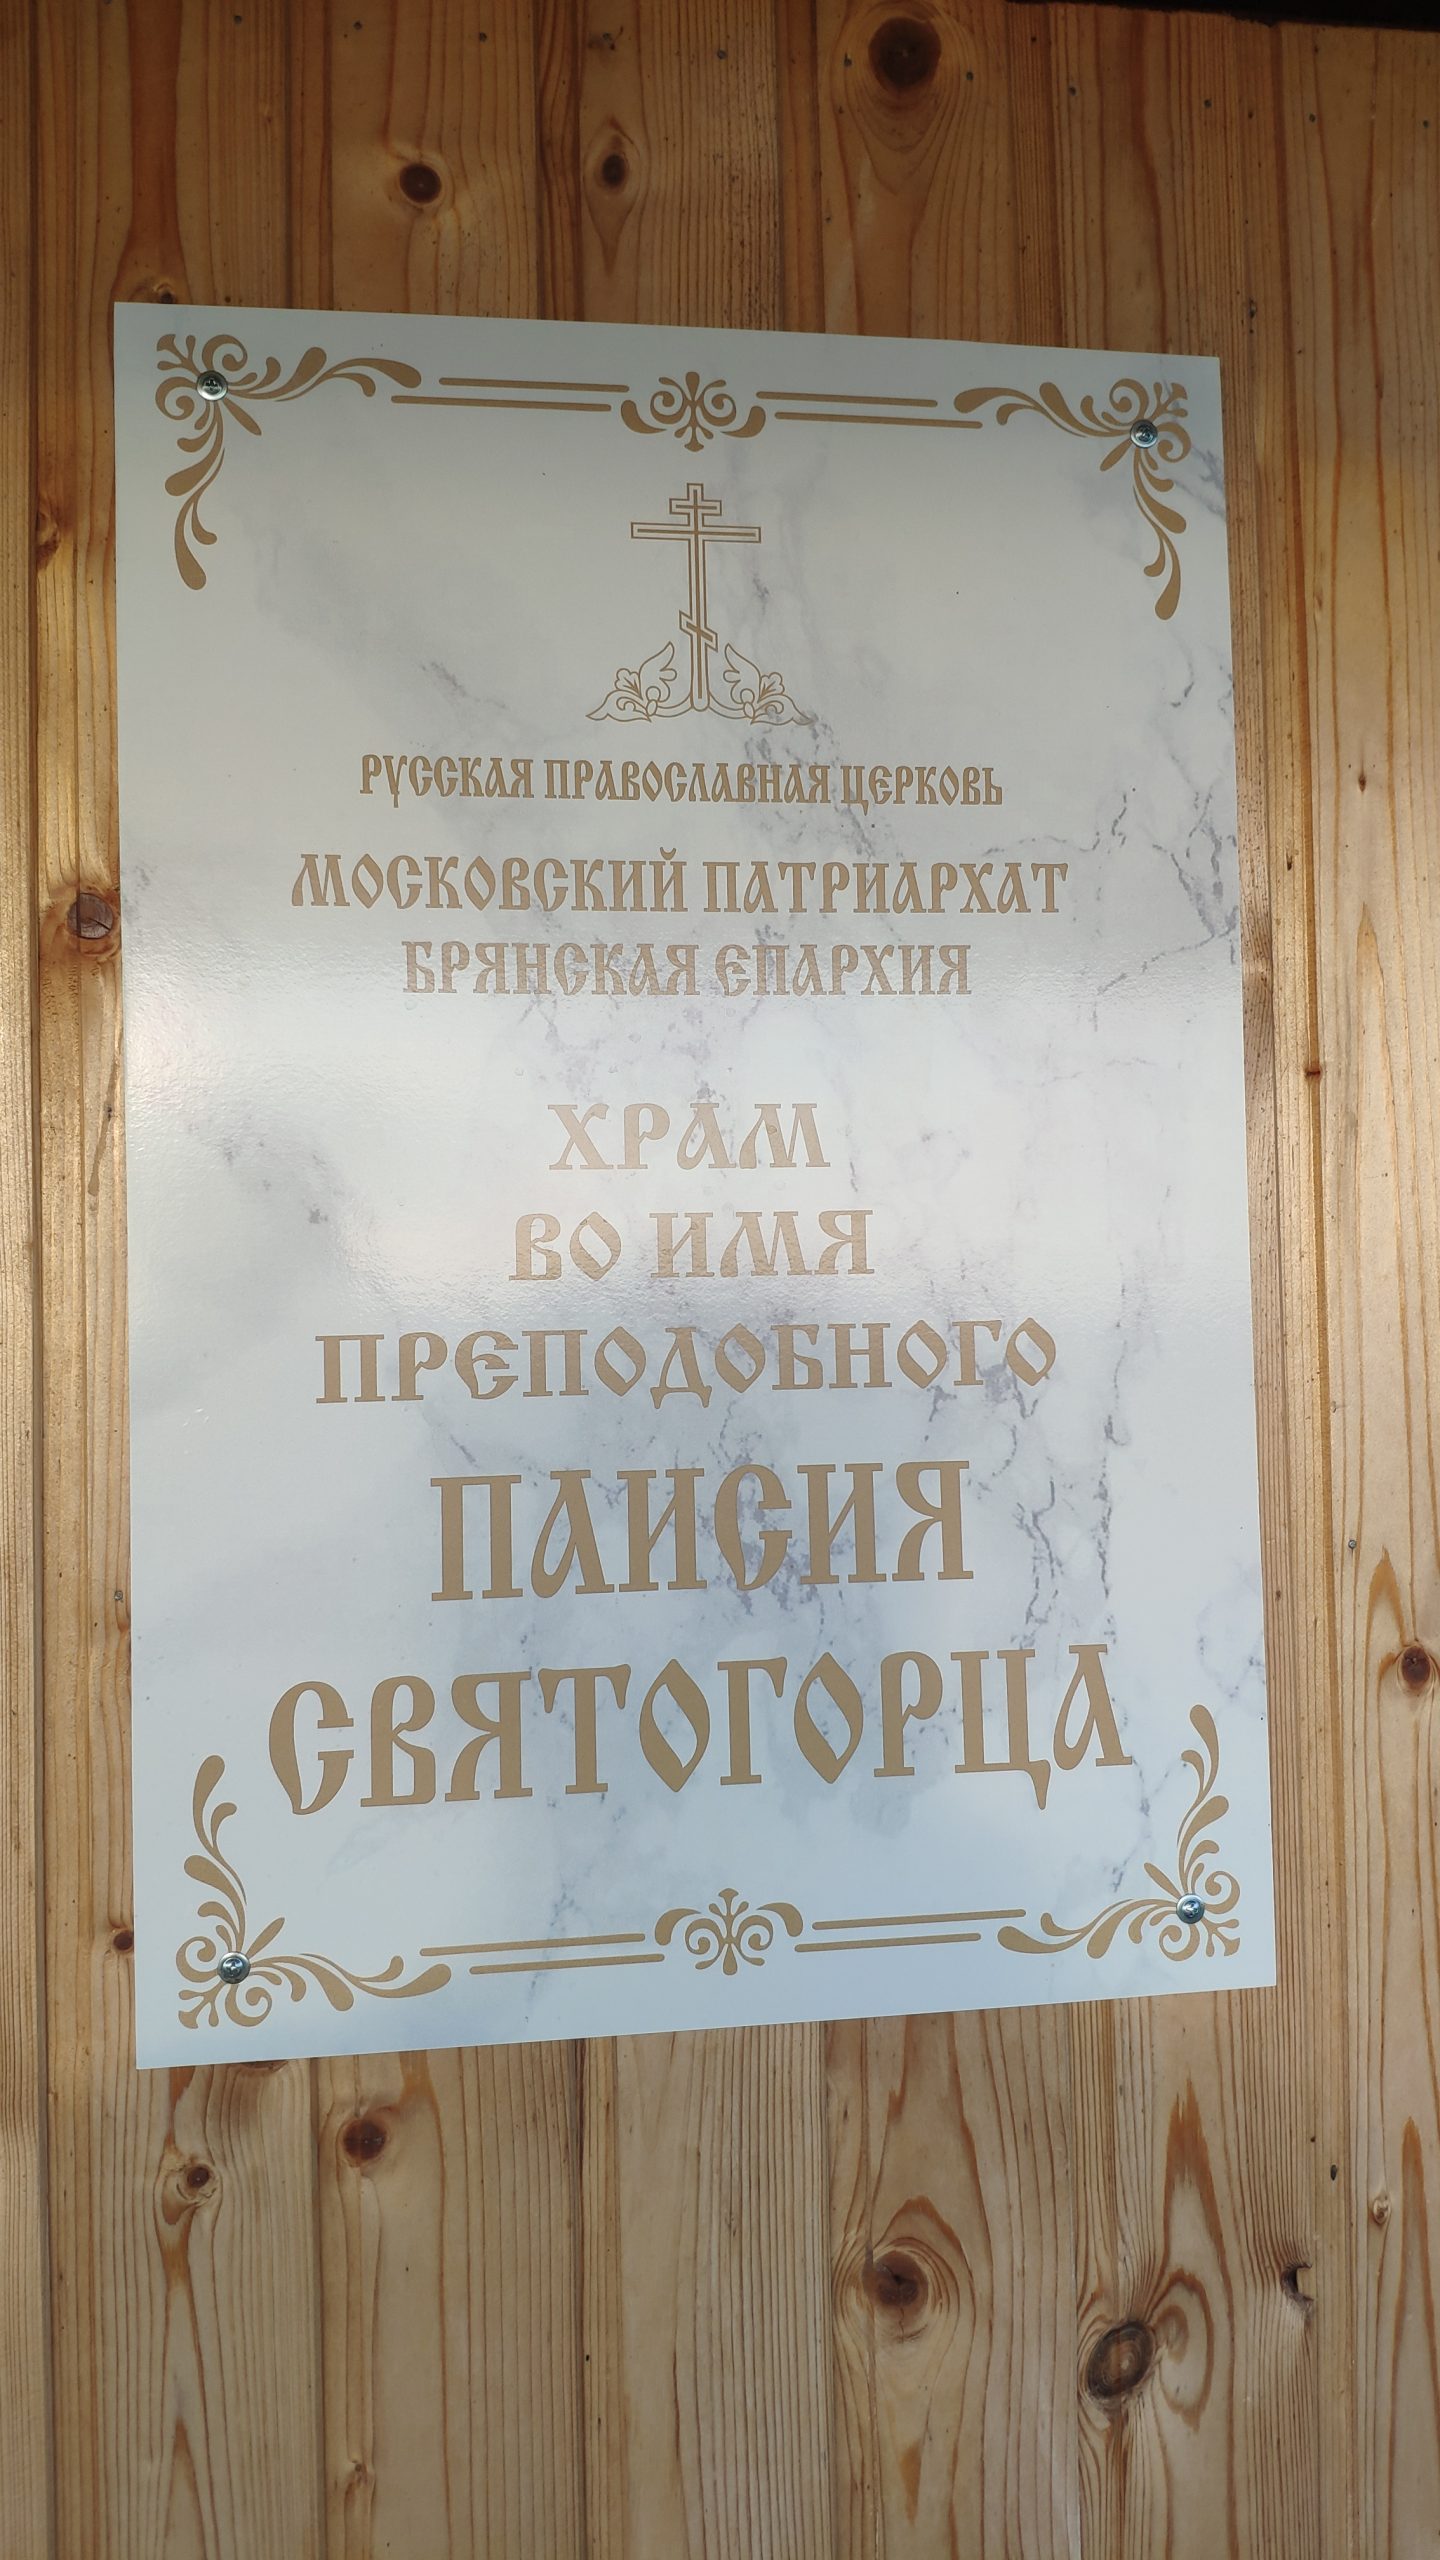 Храм-часовня Паисия Святогорца.